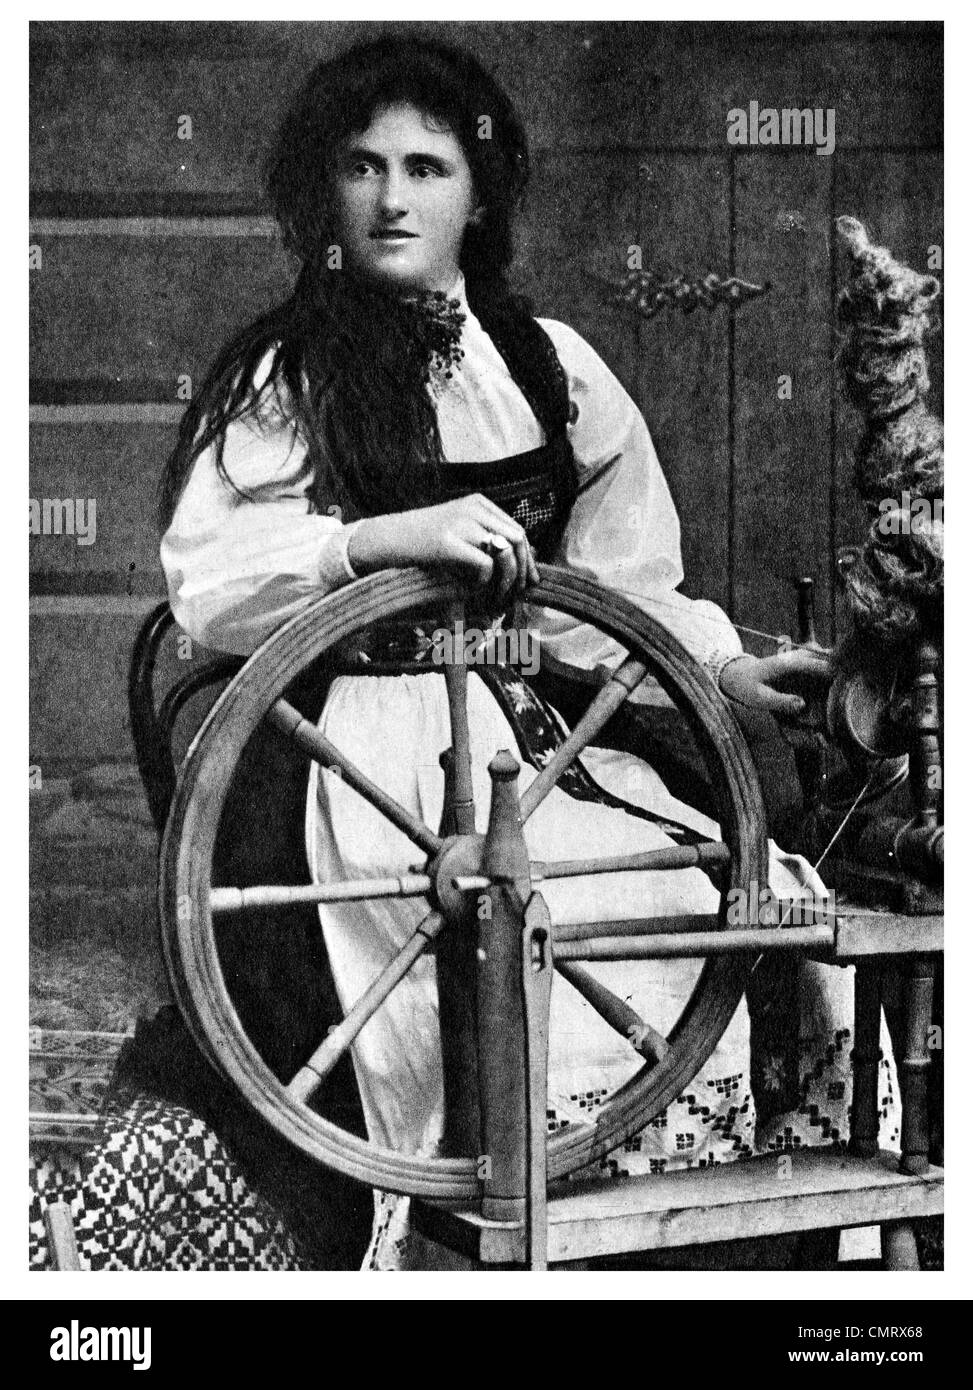 1919 Norvegia ruota di filatura dress maker Foto Stock